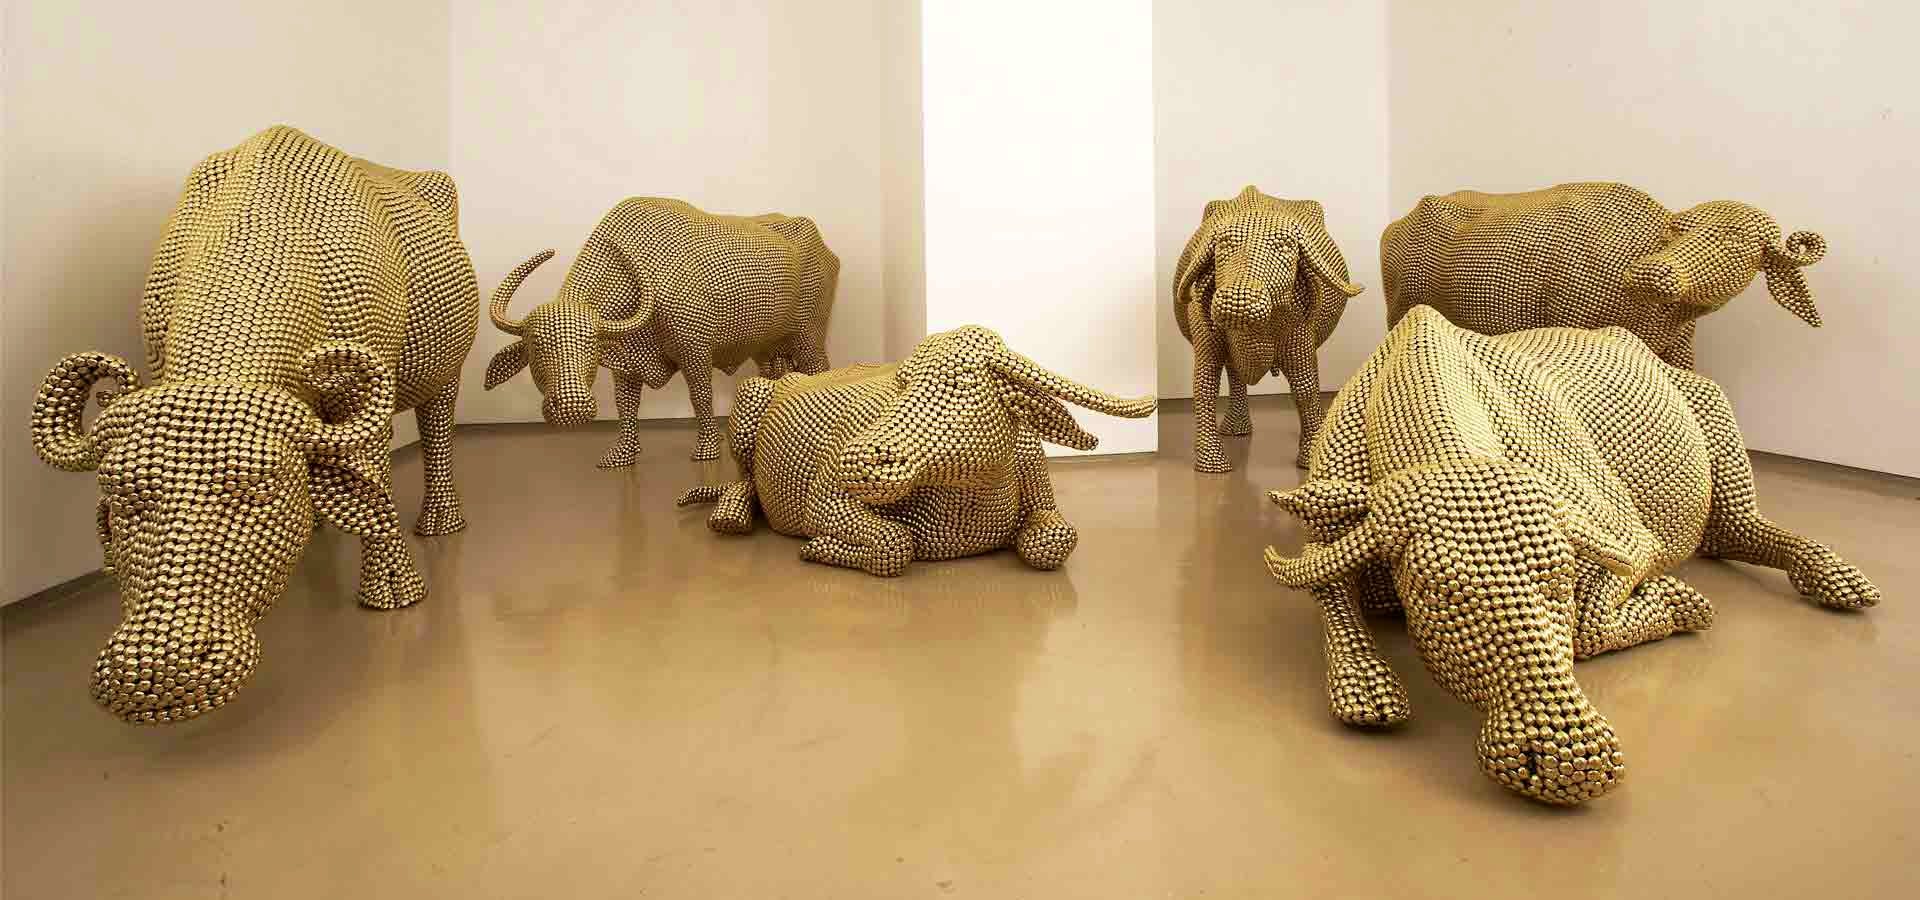 Sculpture,Art,Room,Visual arts,Museum,Rhinoceros,Wildlife,Tourist attraction,Elephant